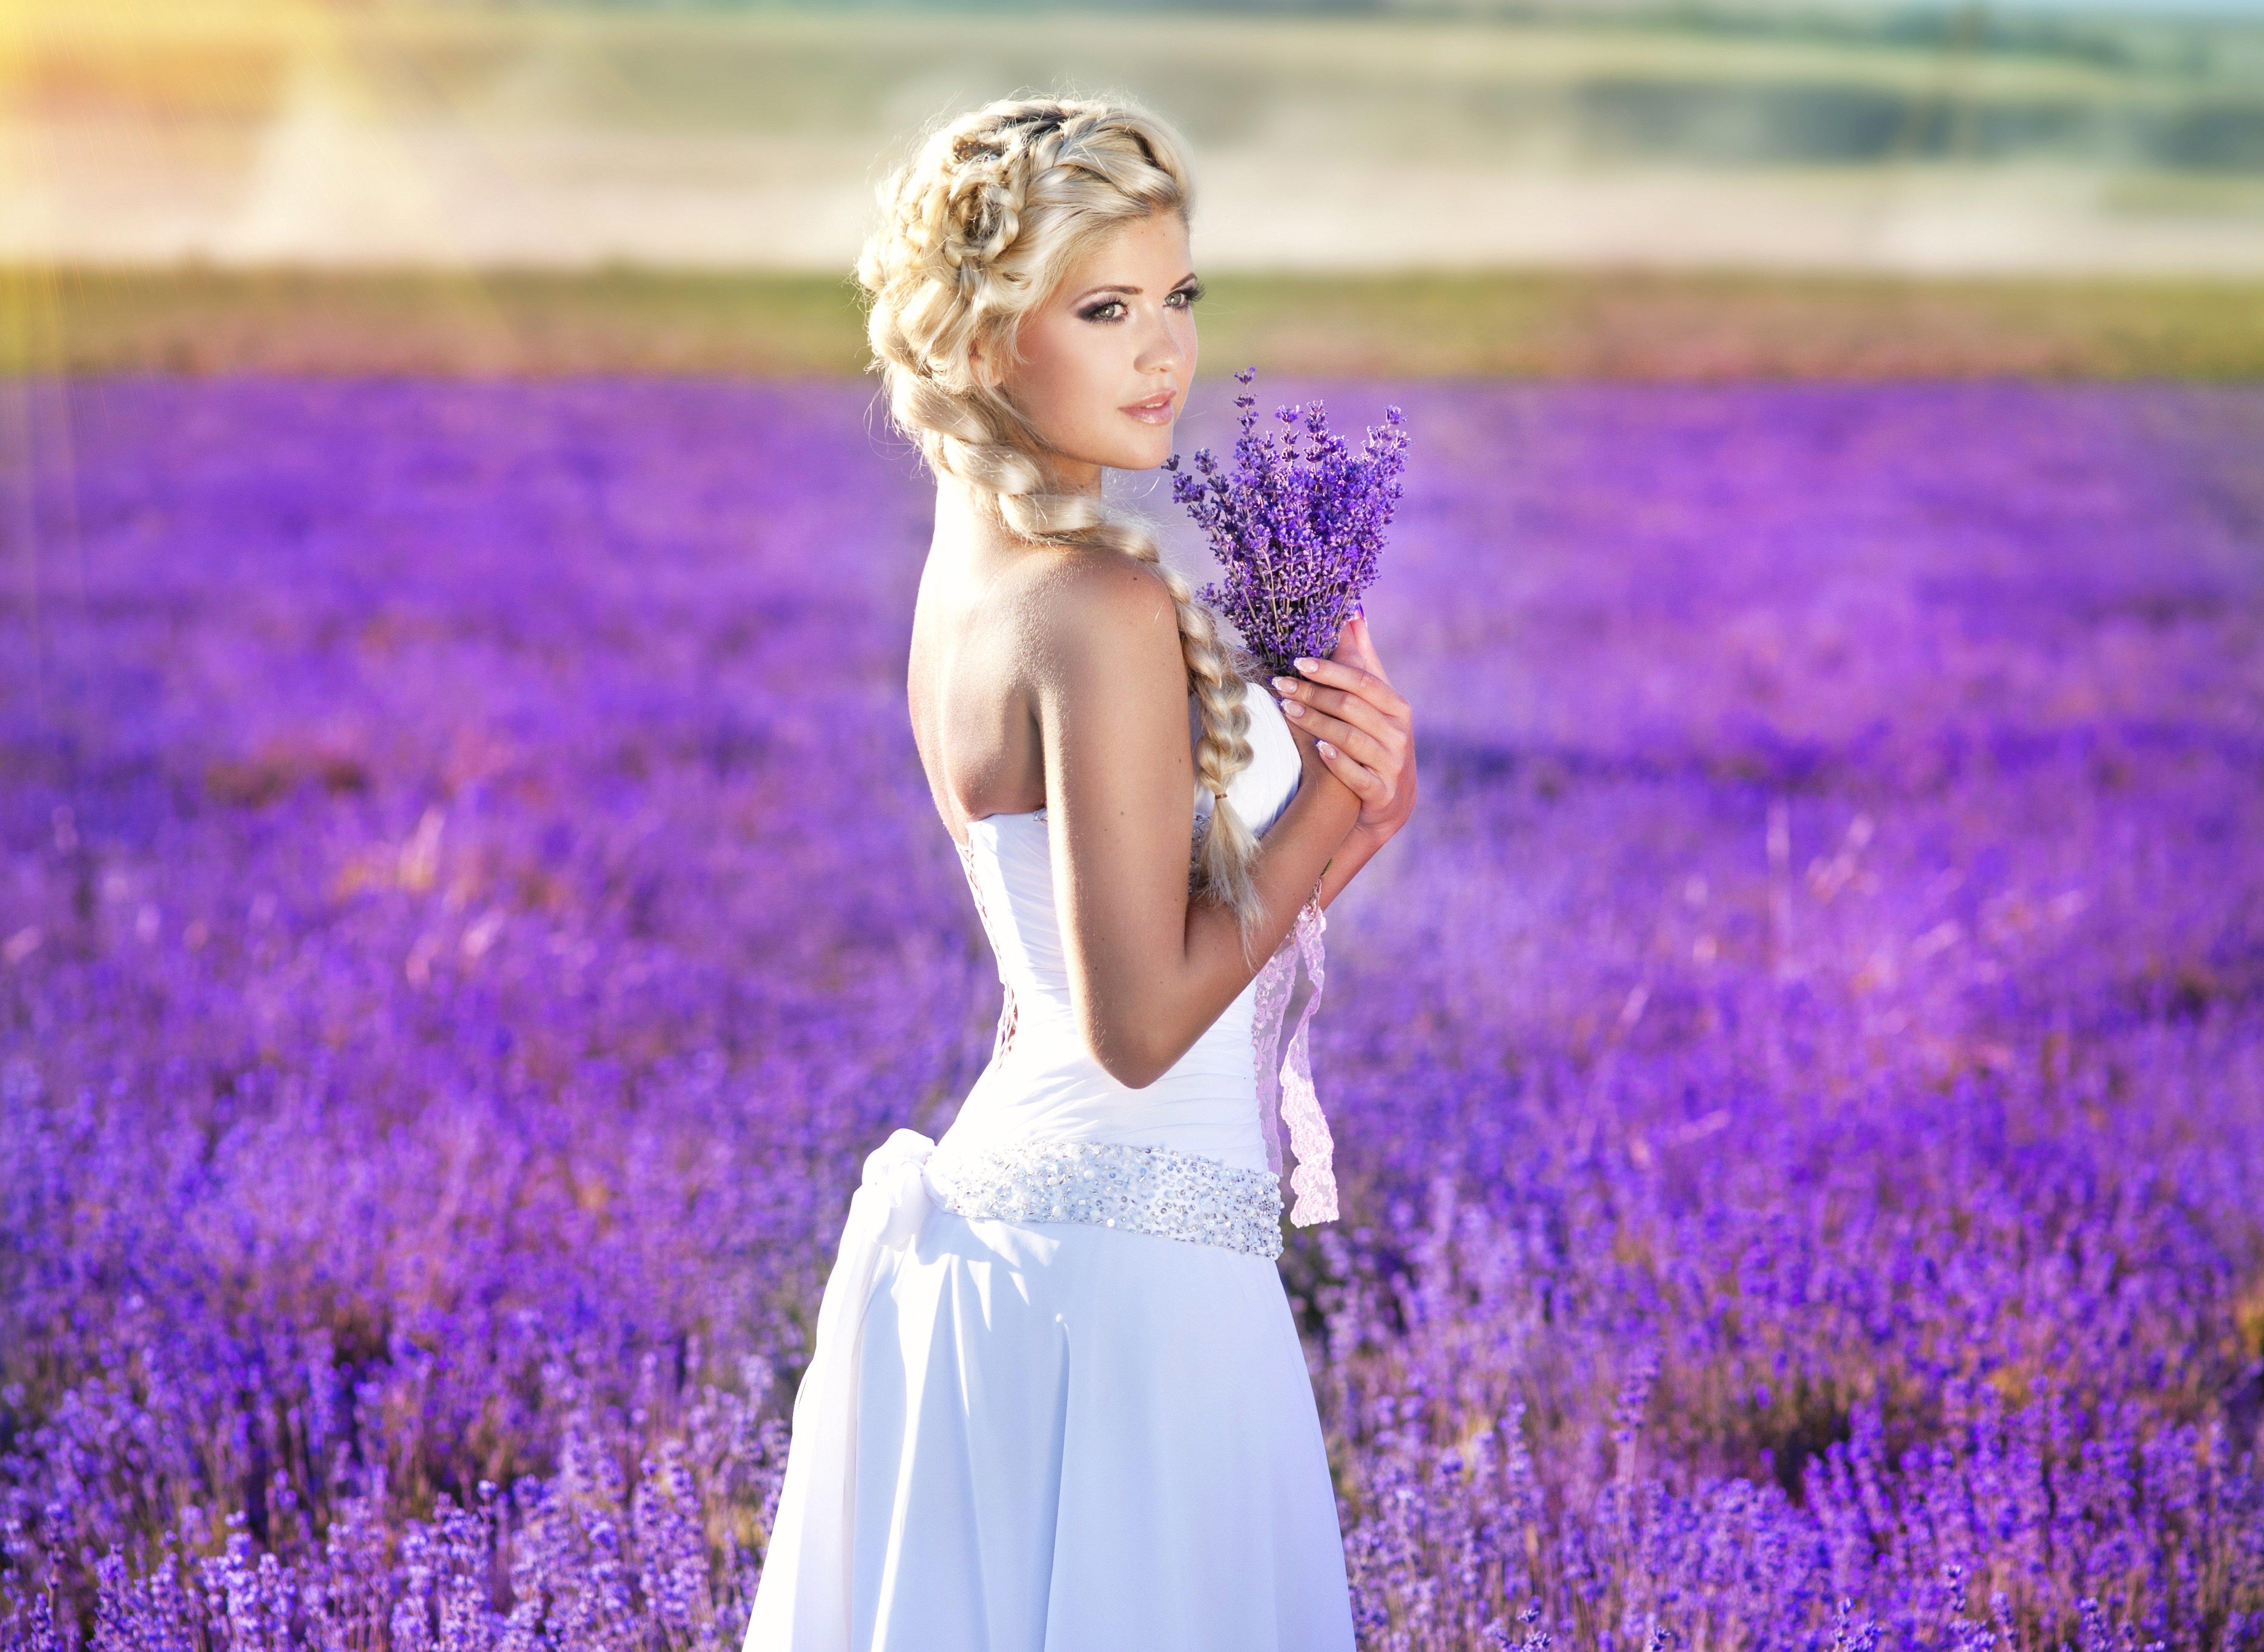 lady, Female, lavender, girl, purple flowers, woman